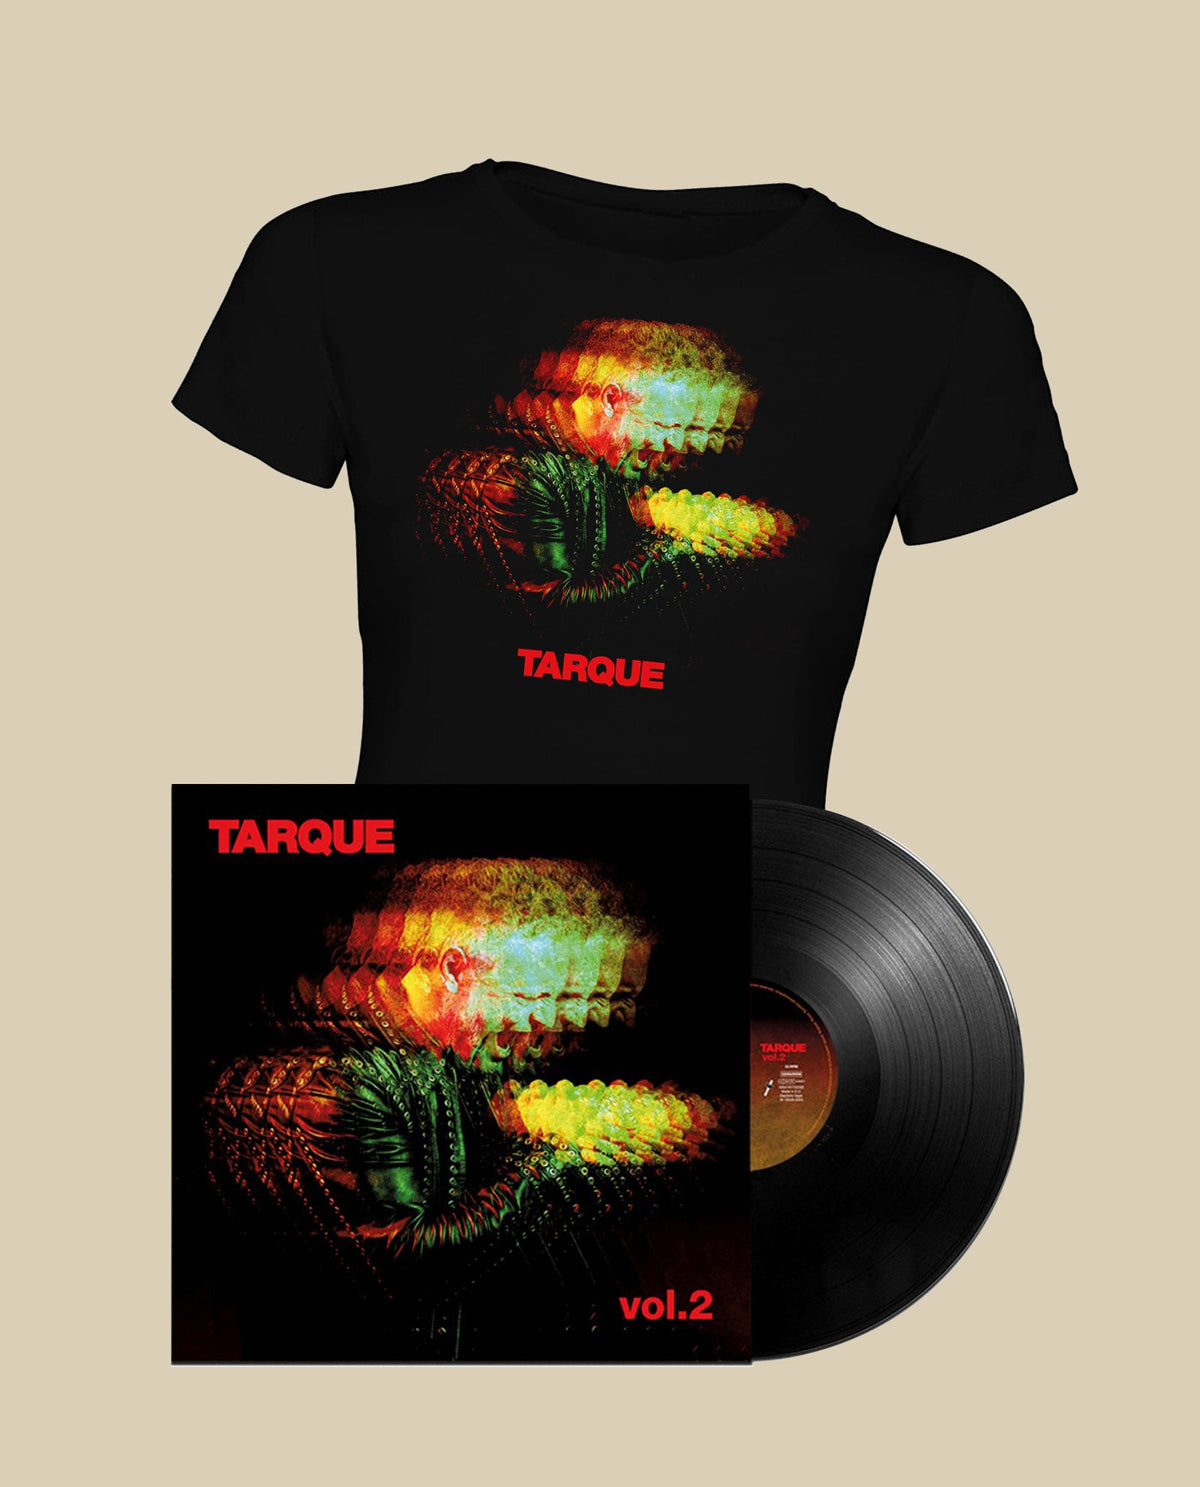 Tarque - Pack LP Vinilo "Vol. 2" + Camiseta - D2fy · Rocktud - Tarque